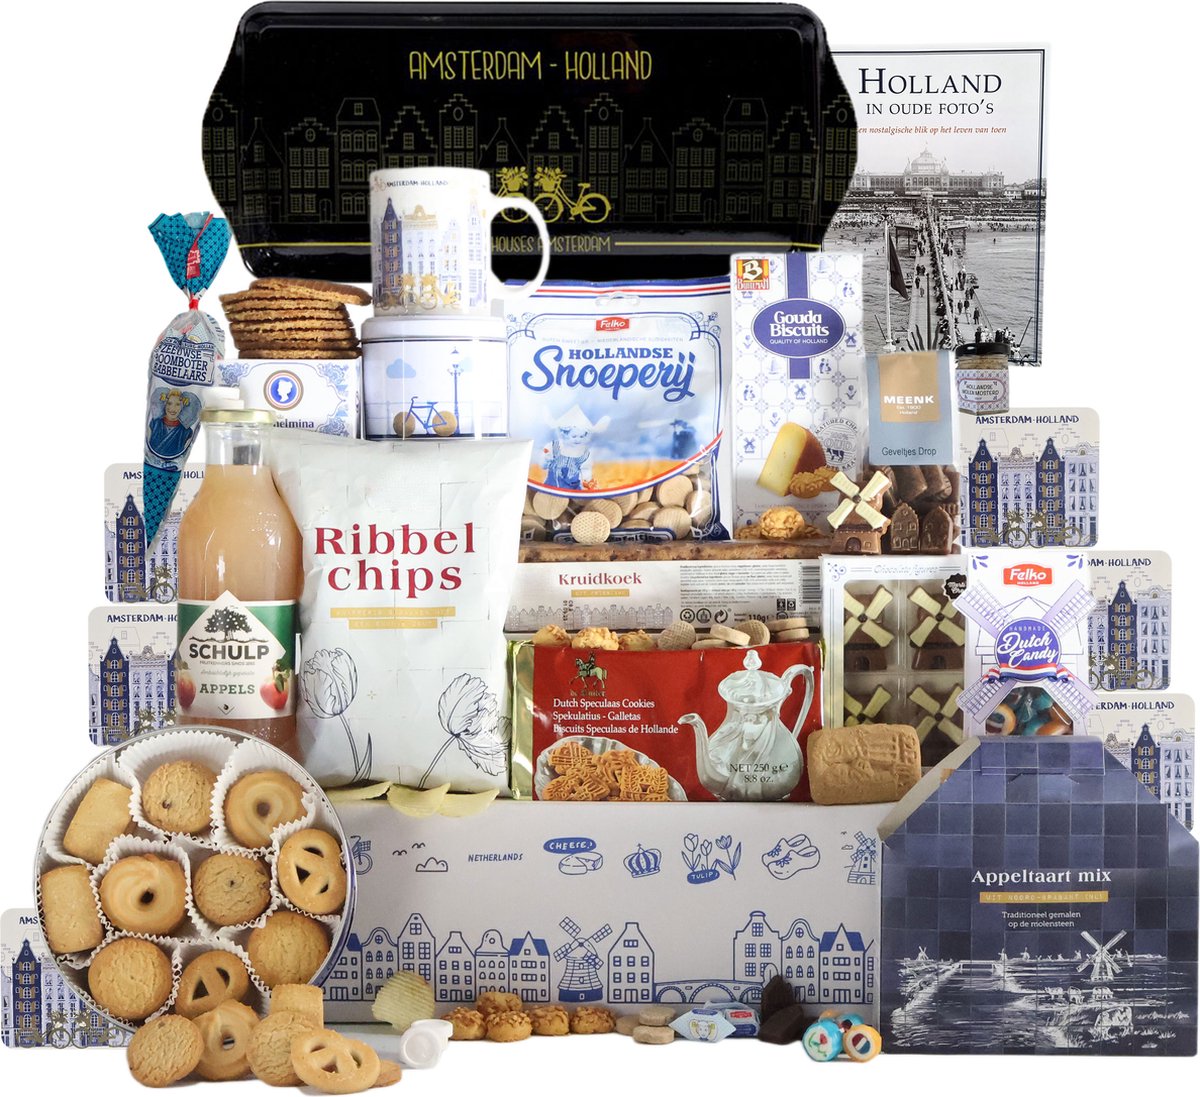 Kerstpakket Cadeaupakket - Holland pakket nr 4 - Hollandse cadeautjes | Pakket met diverse Hollandse lekkernijen